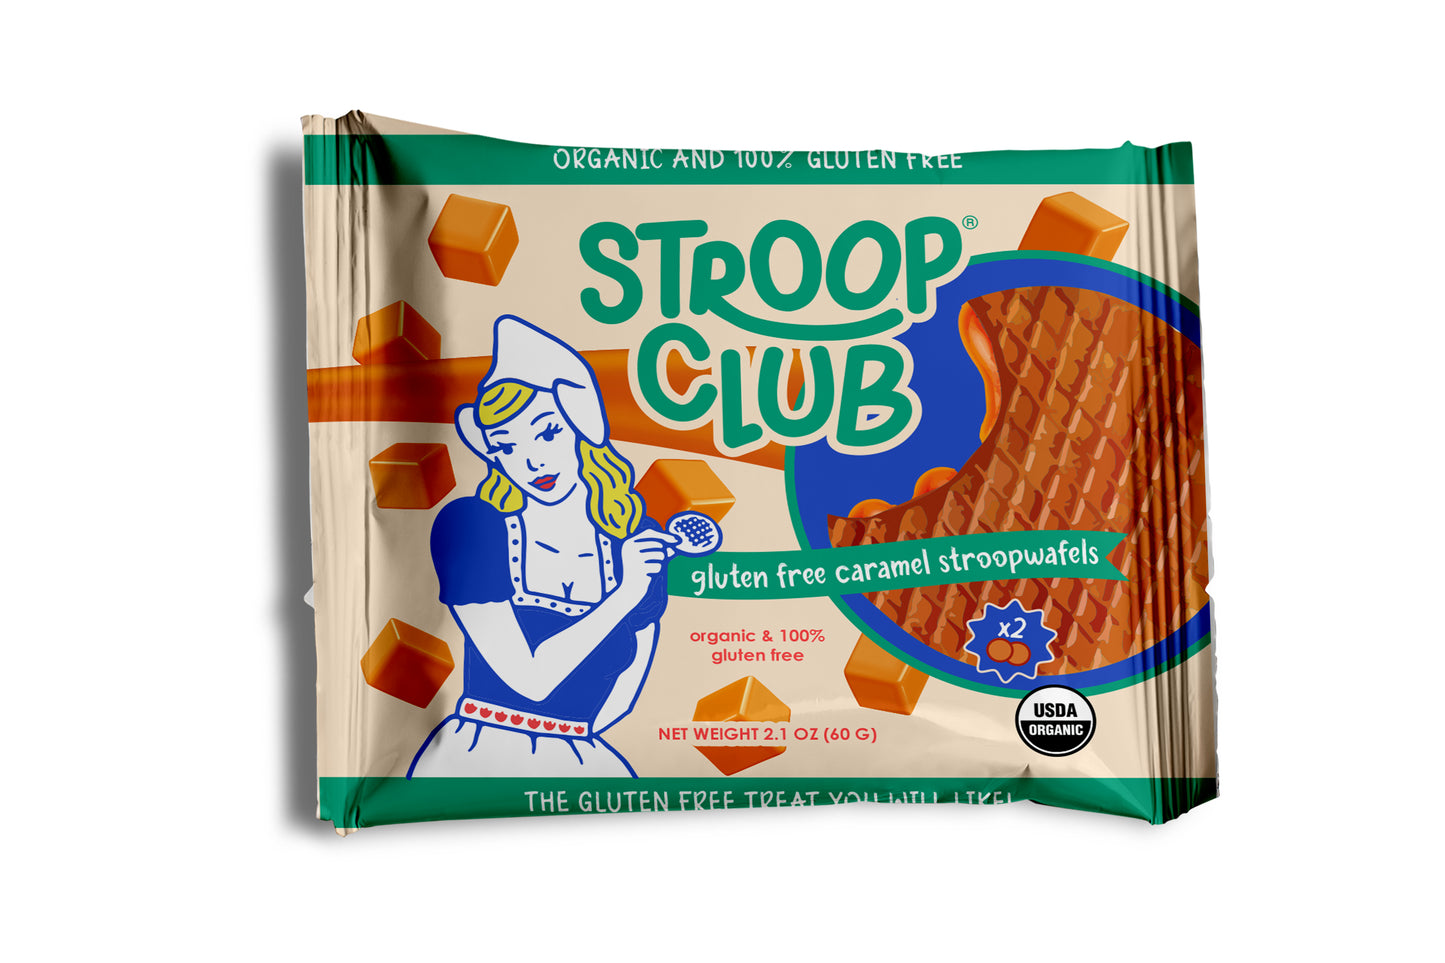 Stroop Club Gluten Free Caramel Organic Stroopwafel 2-pack  (*ESFGKNO), 63g/2.1oz